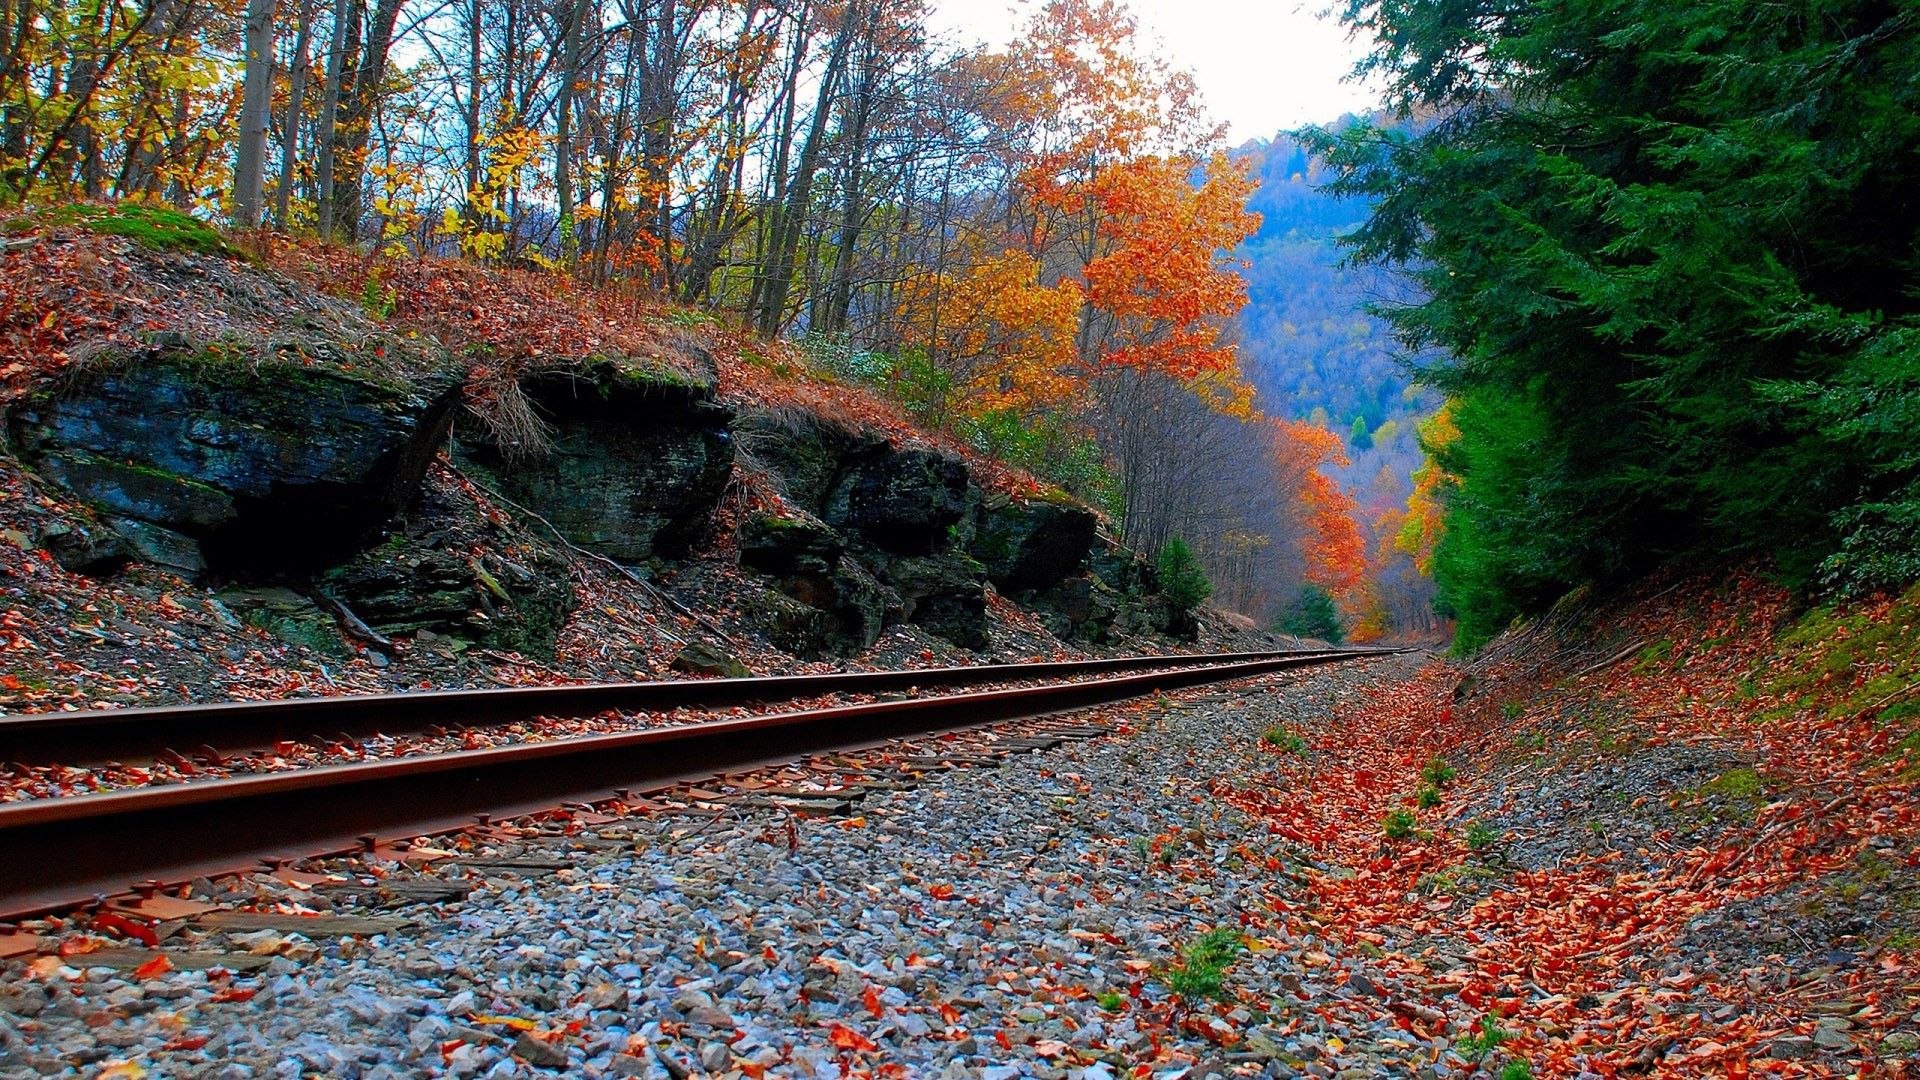 Download 1920x1080 Railroad in autumn wallpaper